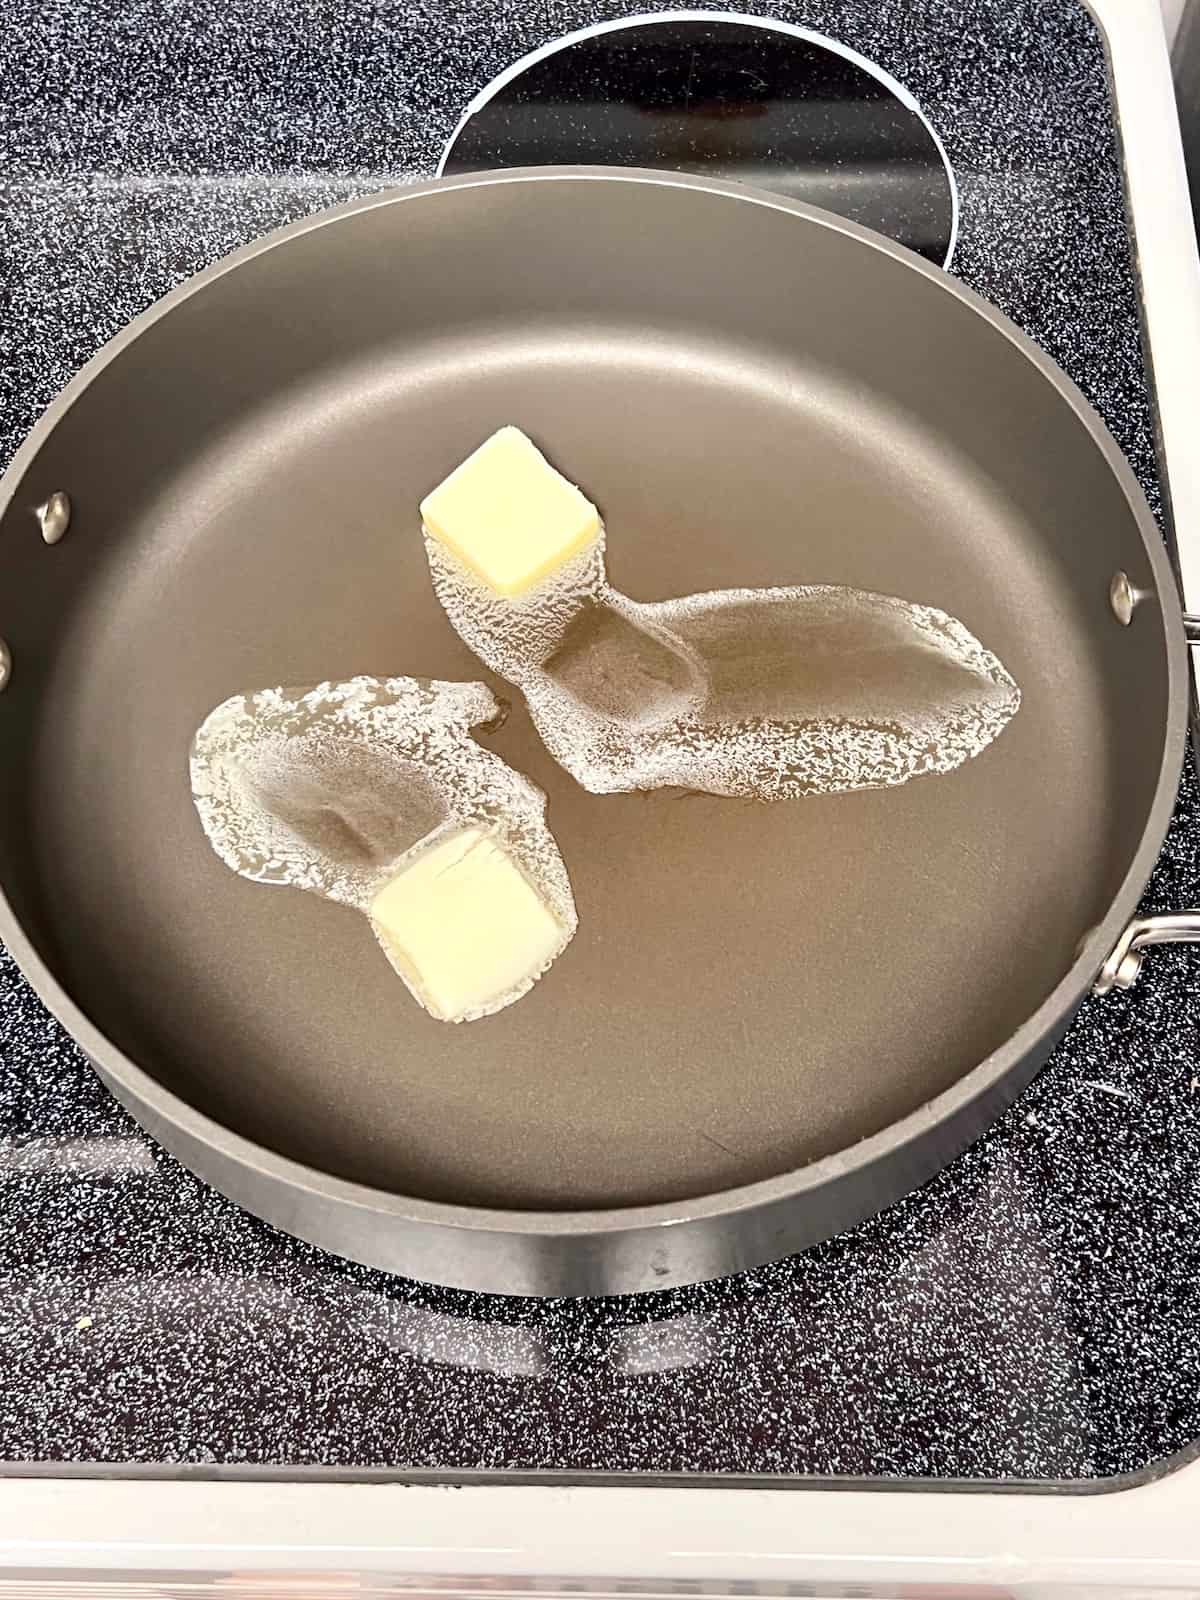 Melting butter in the skillet.